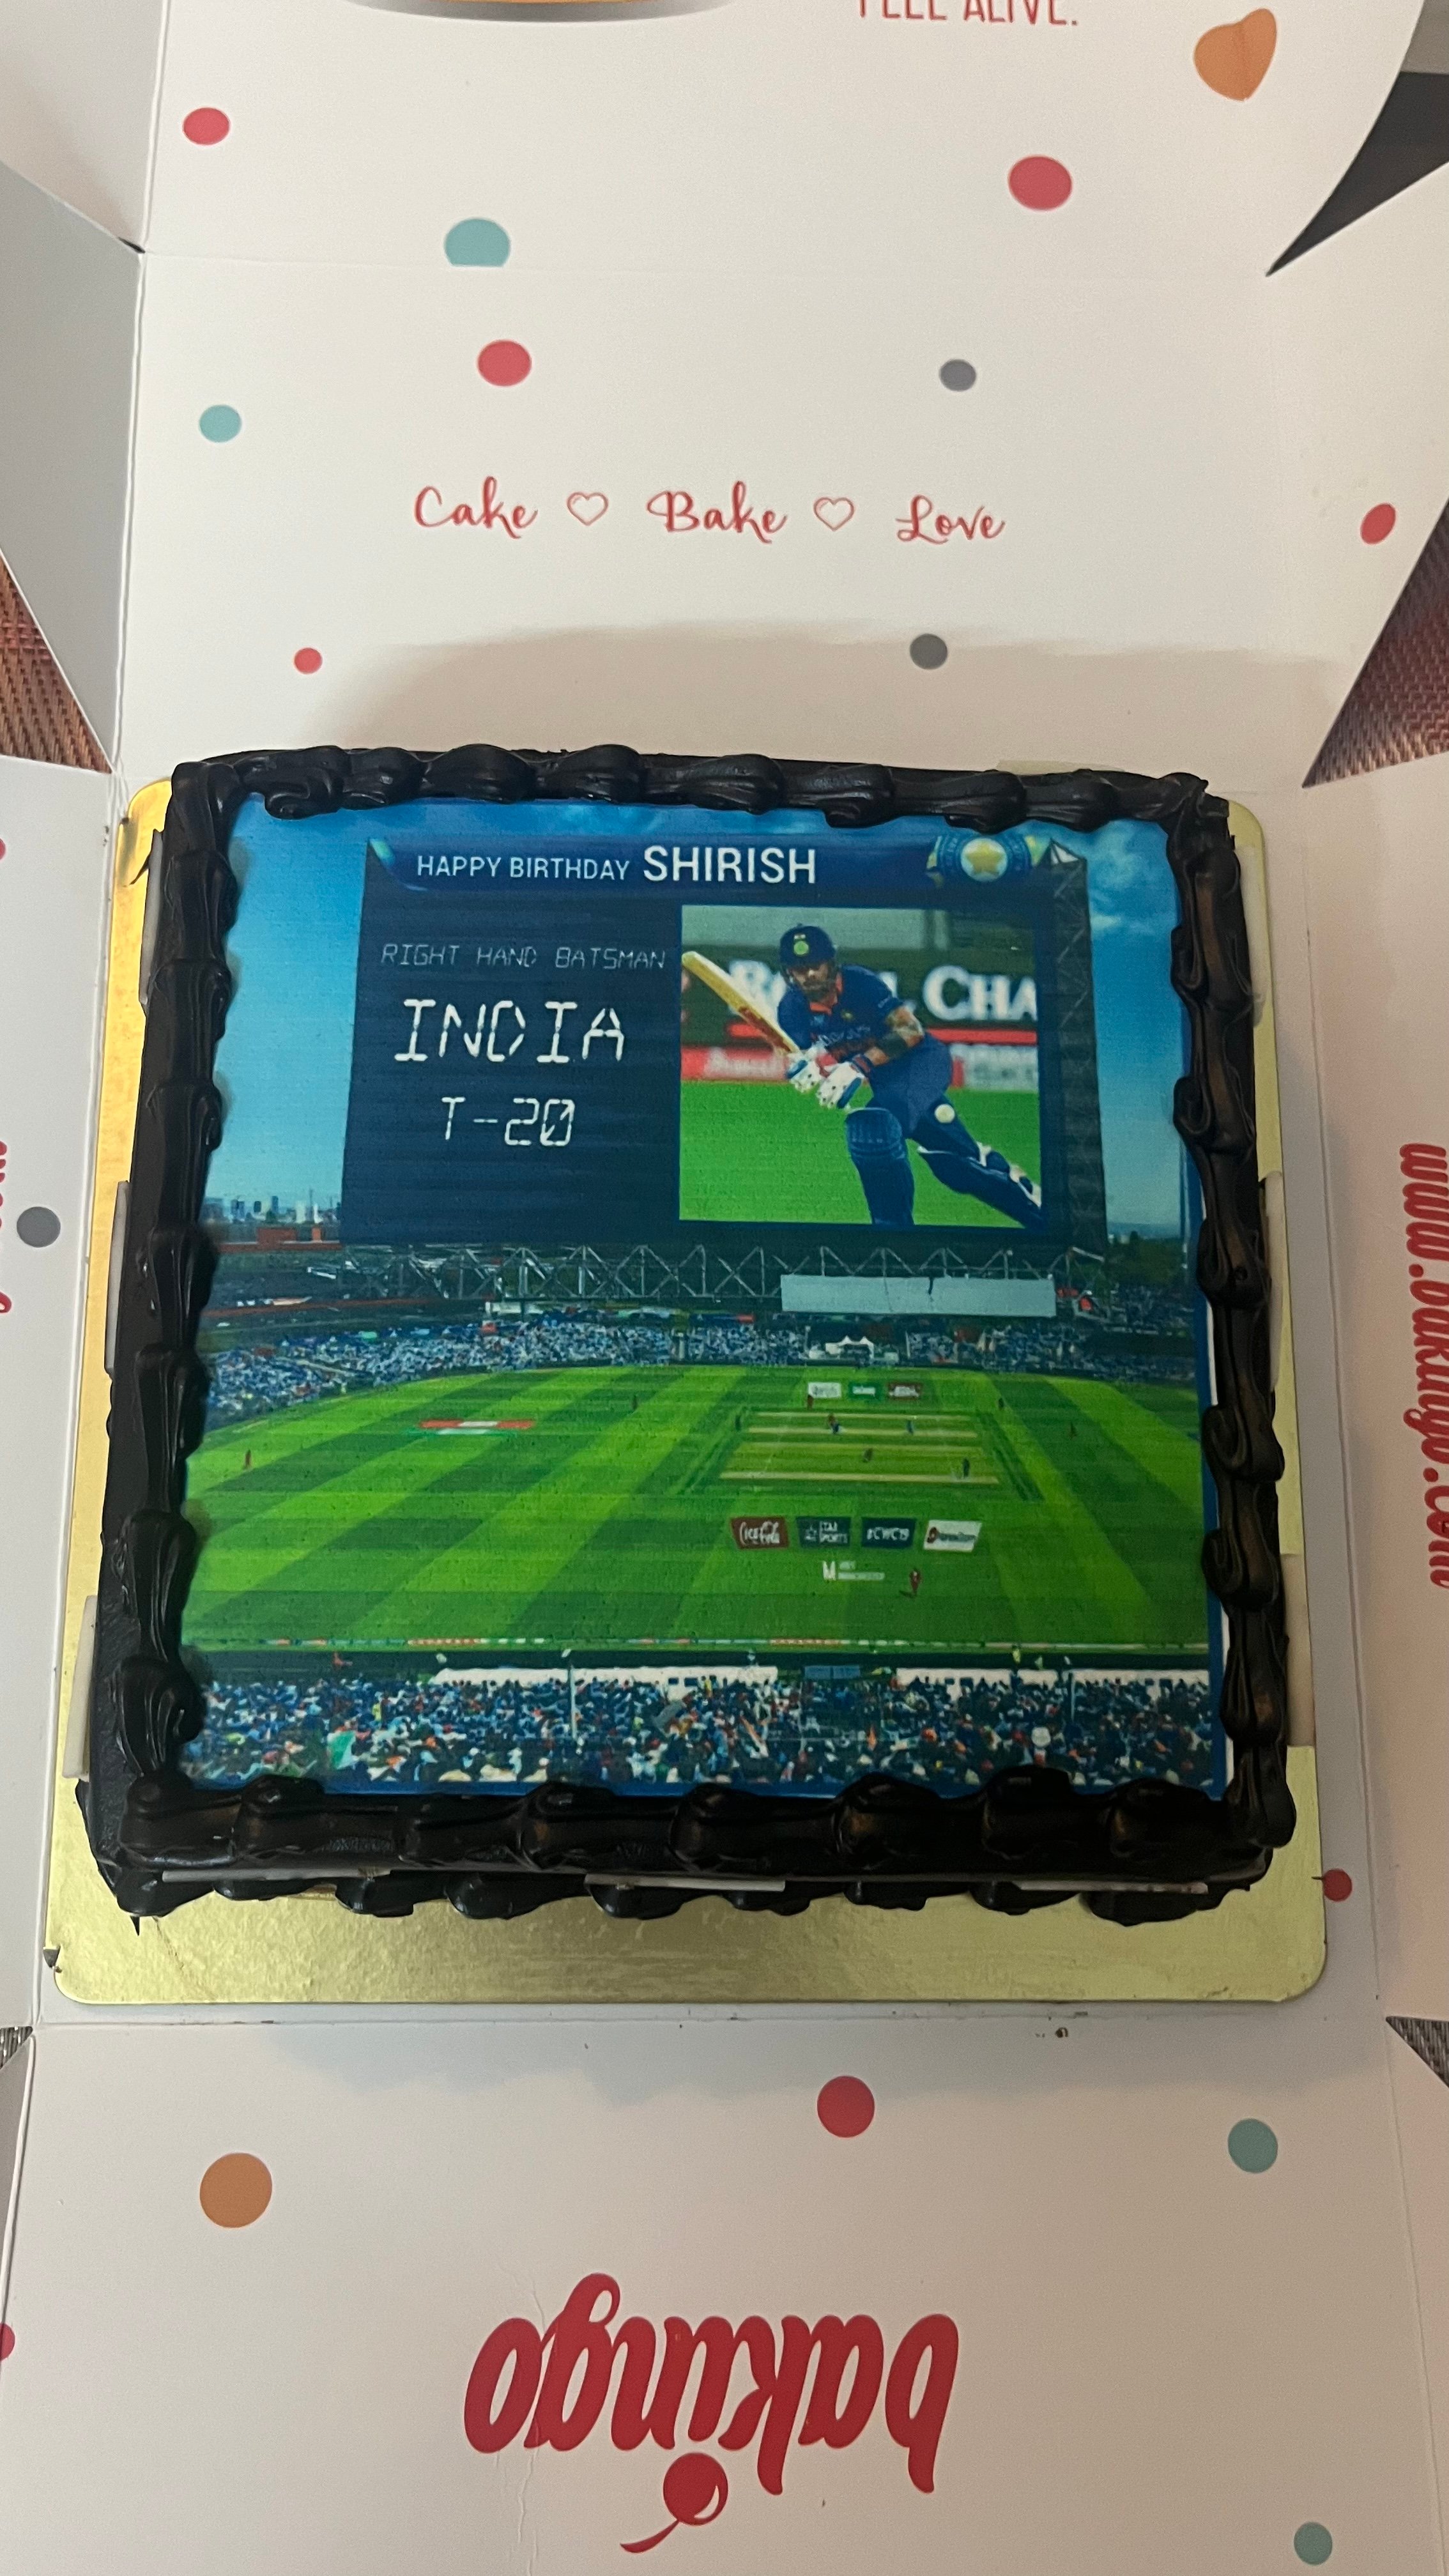 Details more than 140 cricket ground cake design super hot